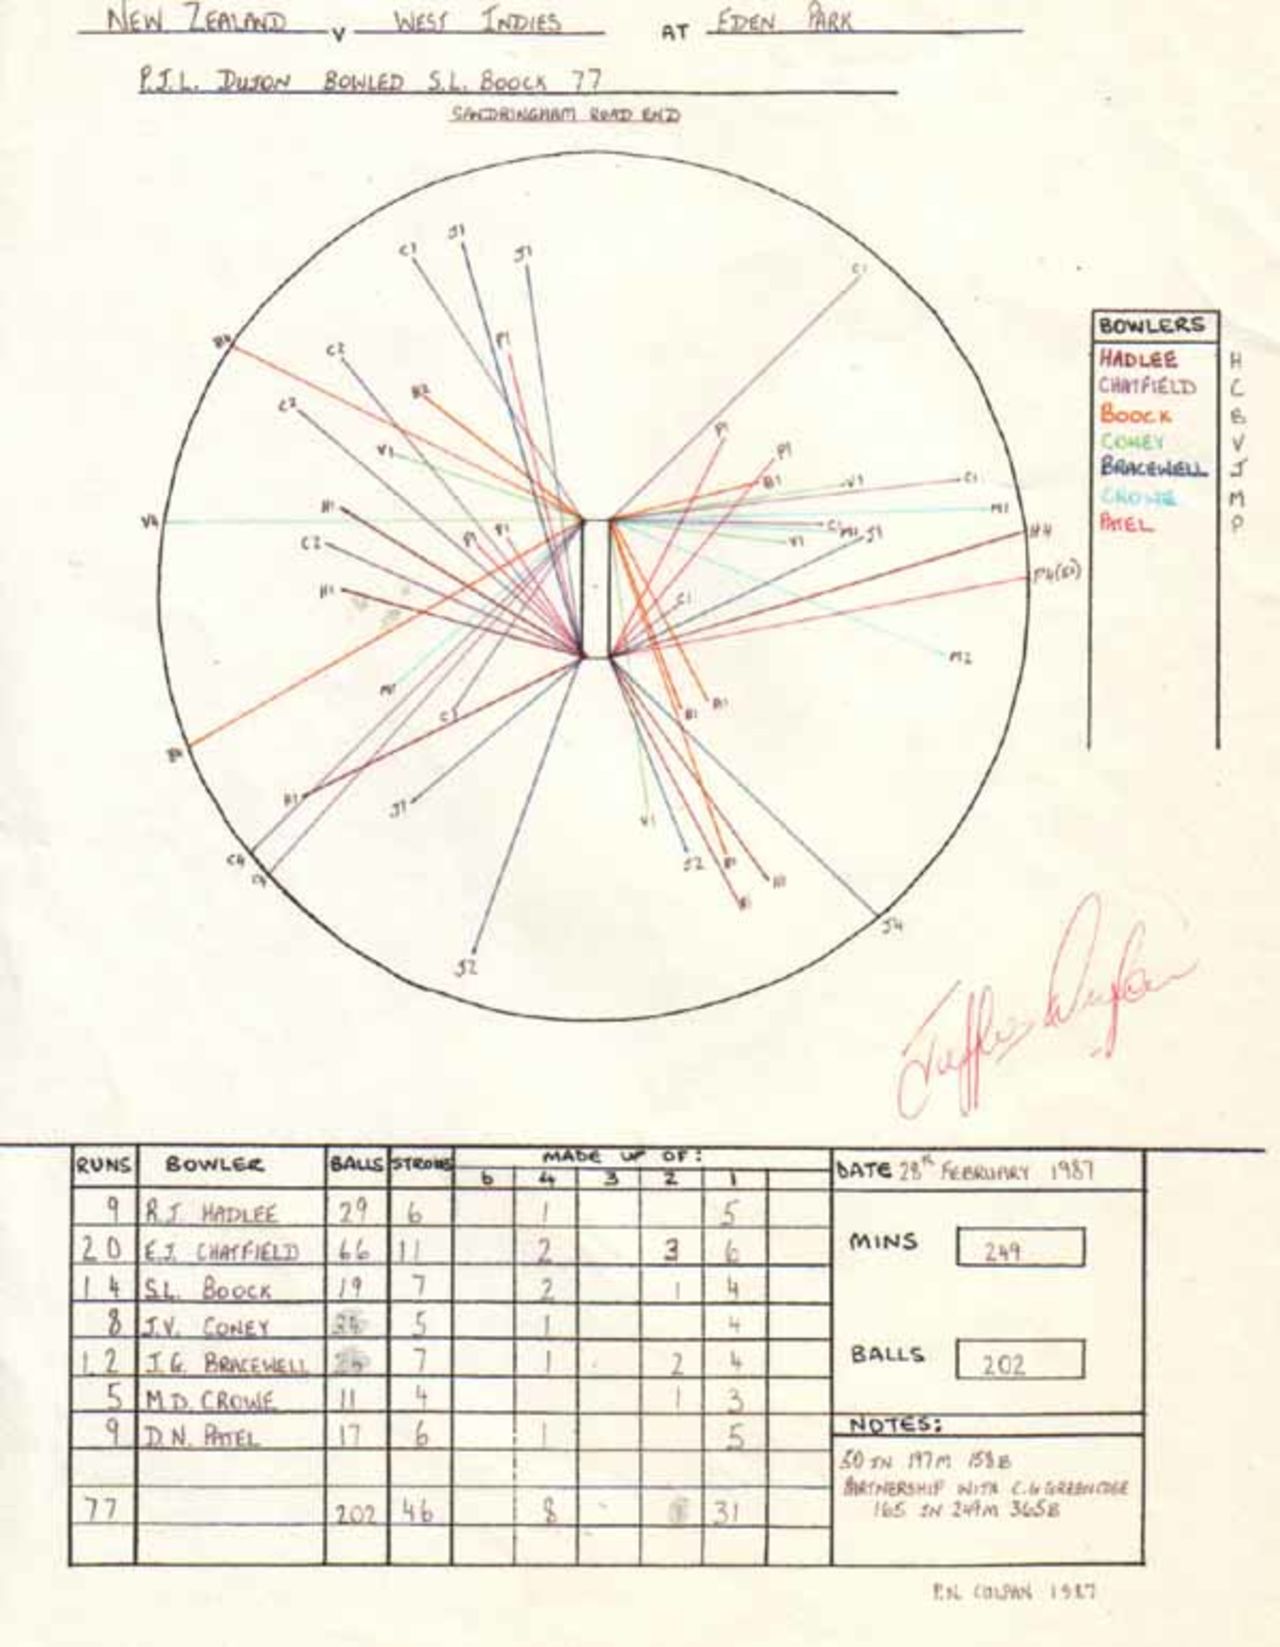 Wagon Wheel of Jeff Dujon's 77 v New Zealand, Eden Park 25th February 1987